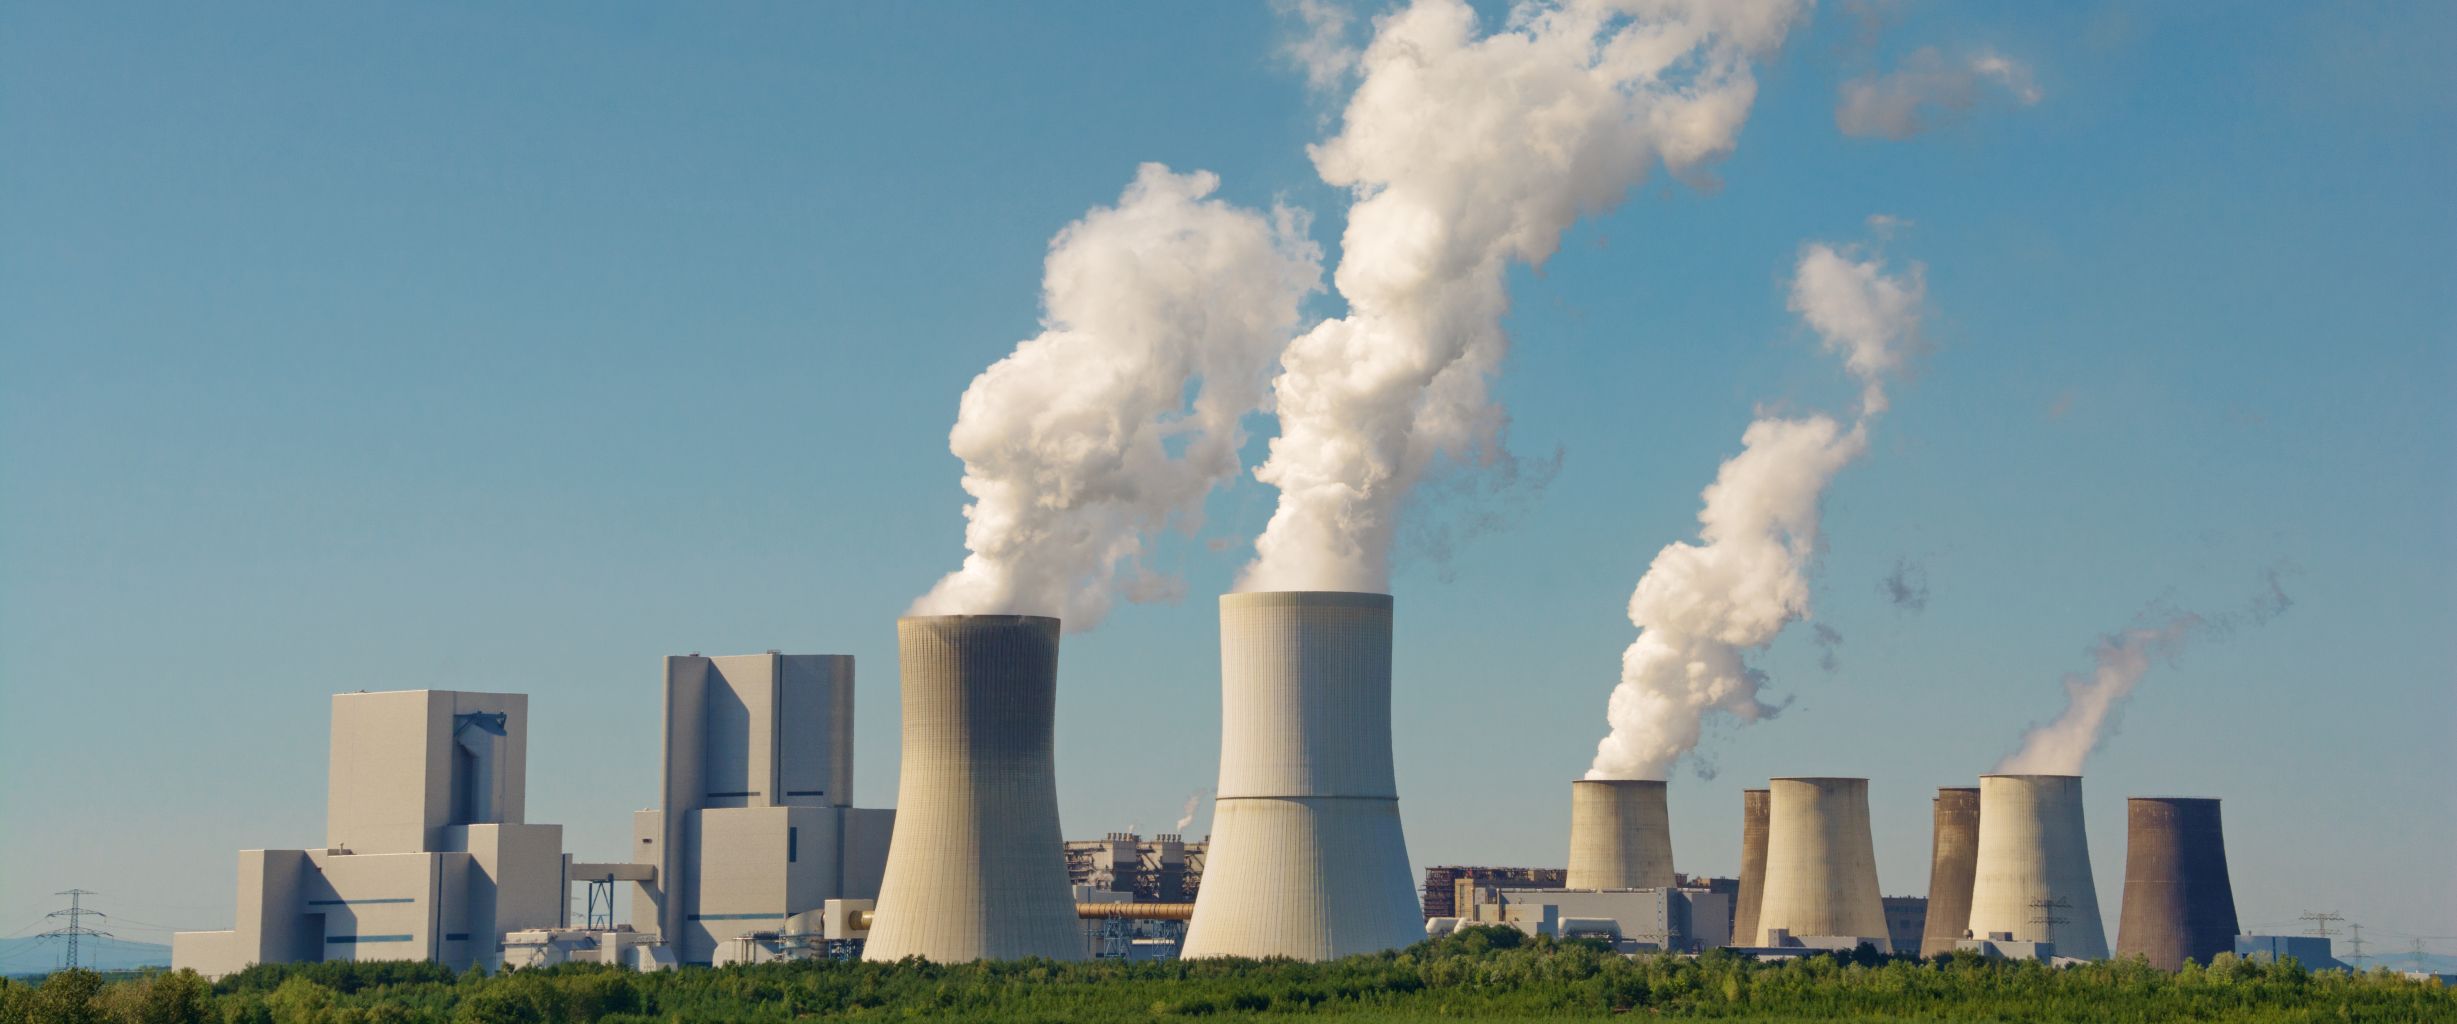 Panoramabild von Kohlekraftwerk